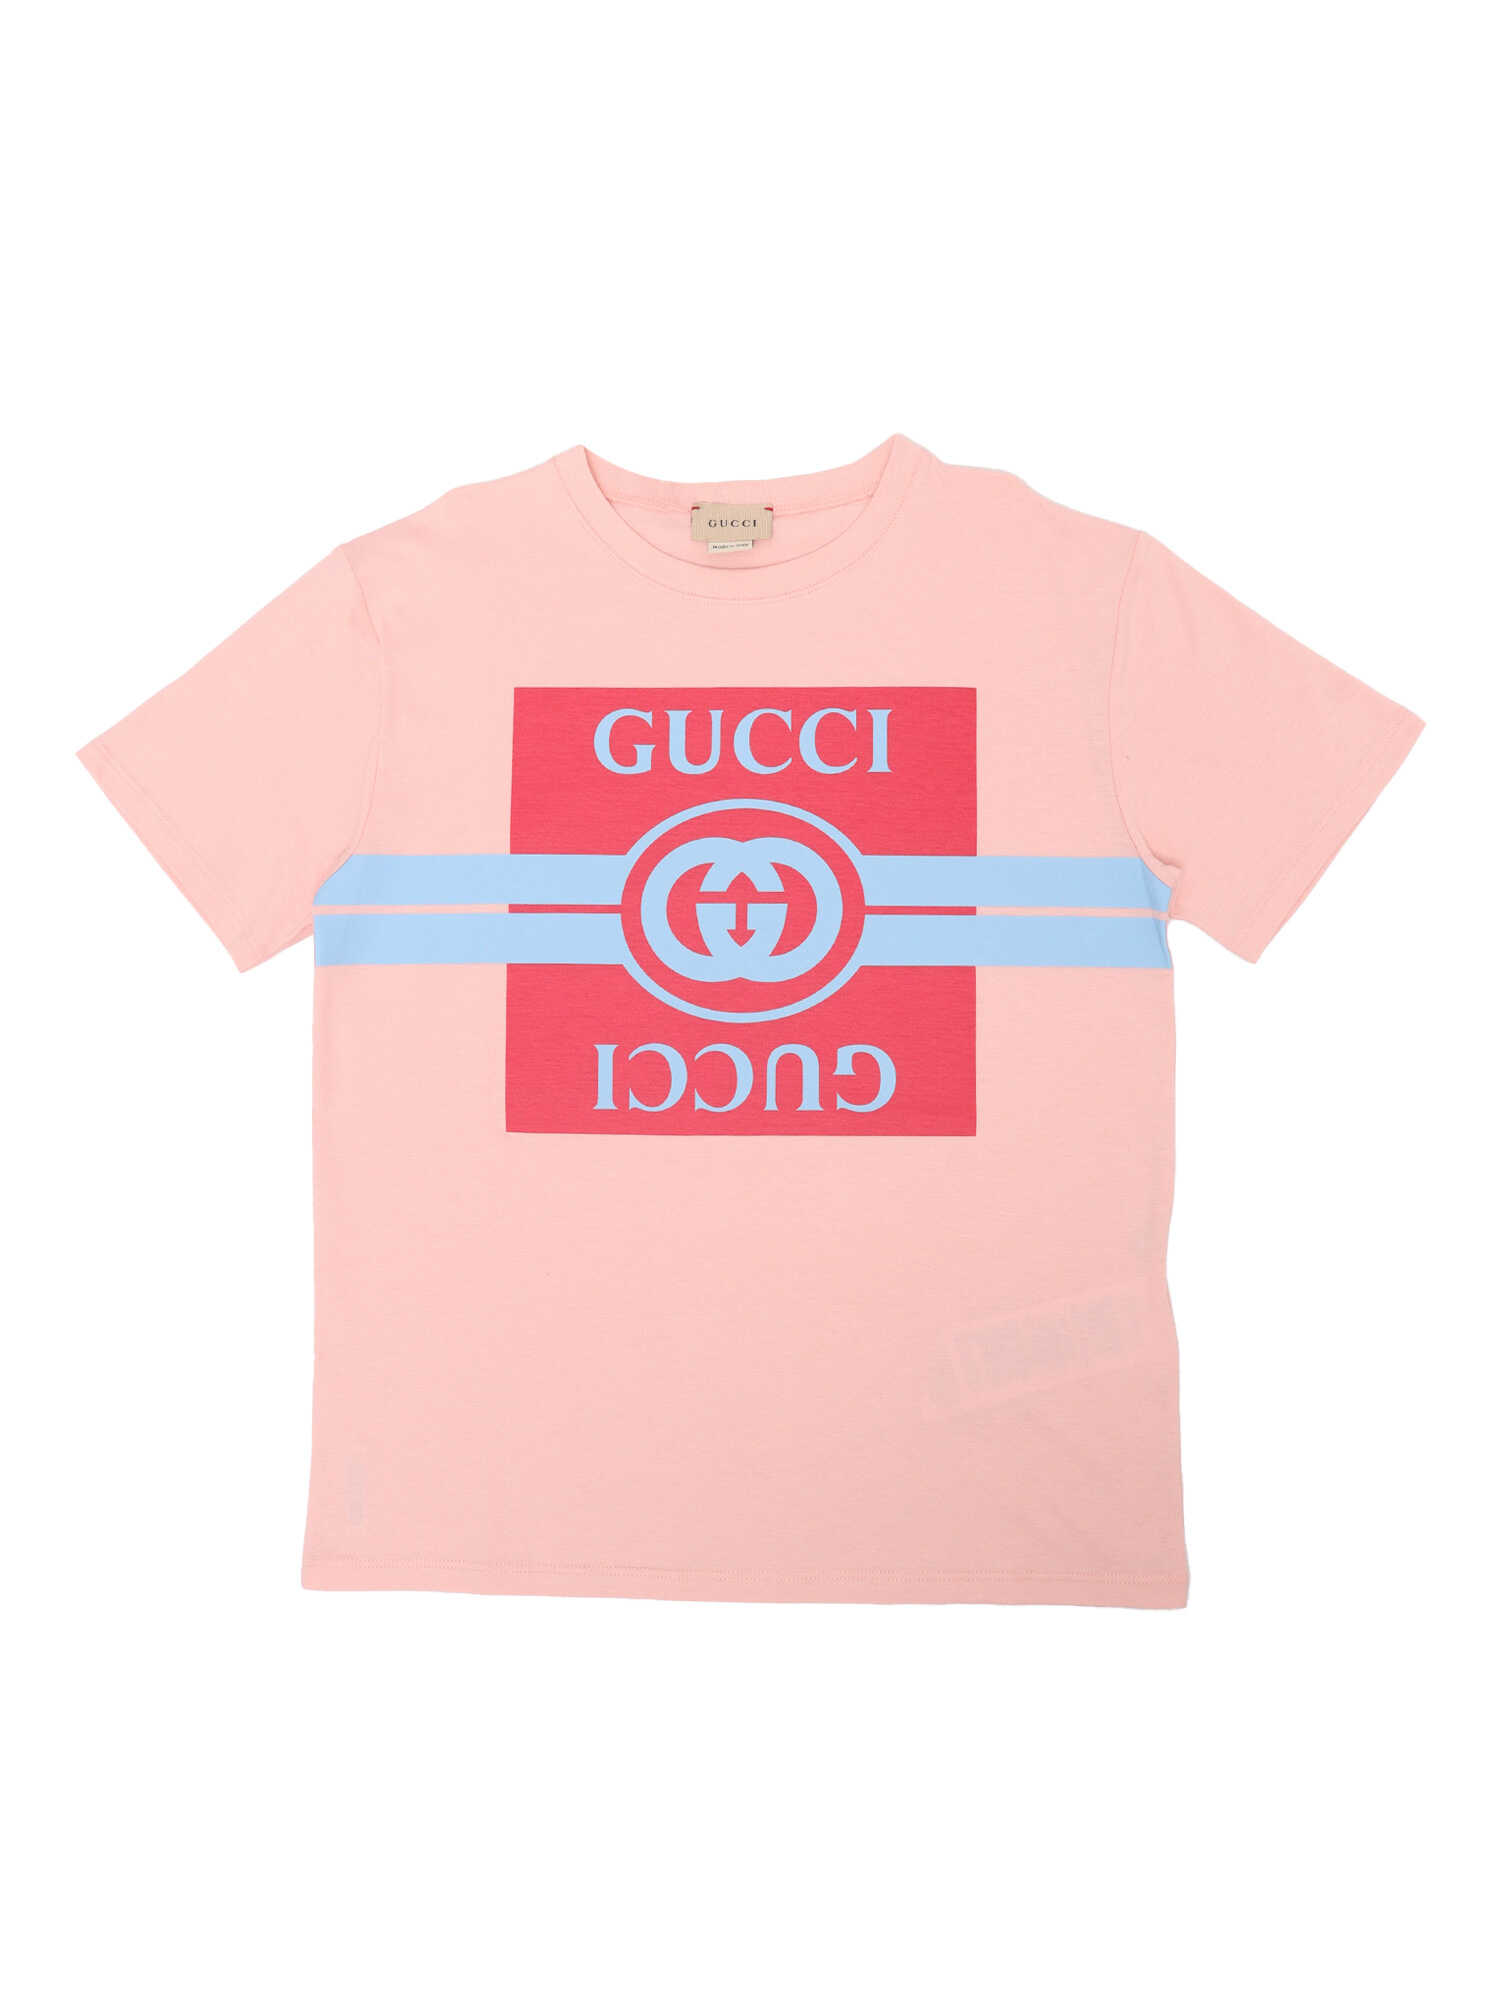 Gucci GG t-shirt Pink